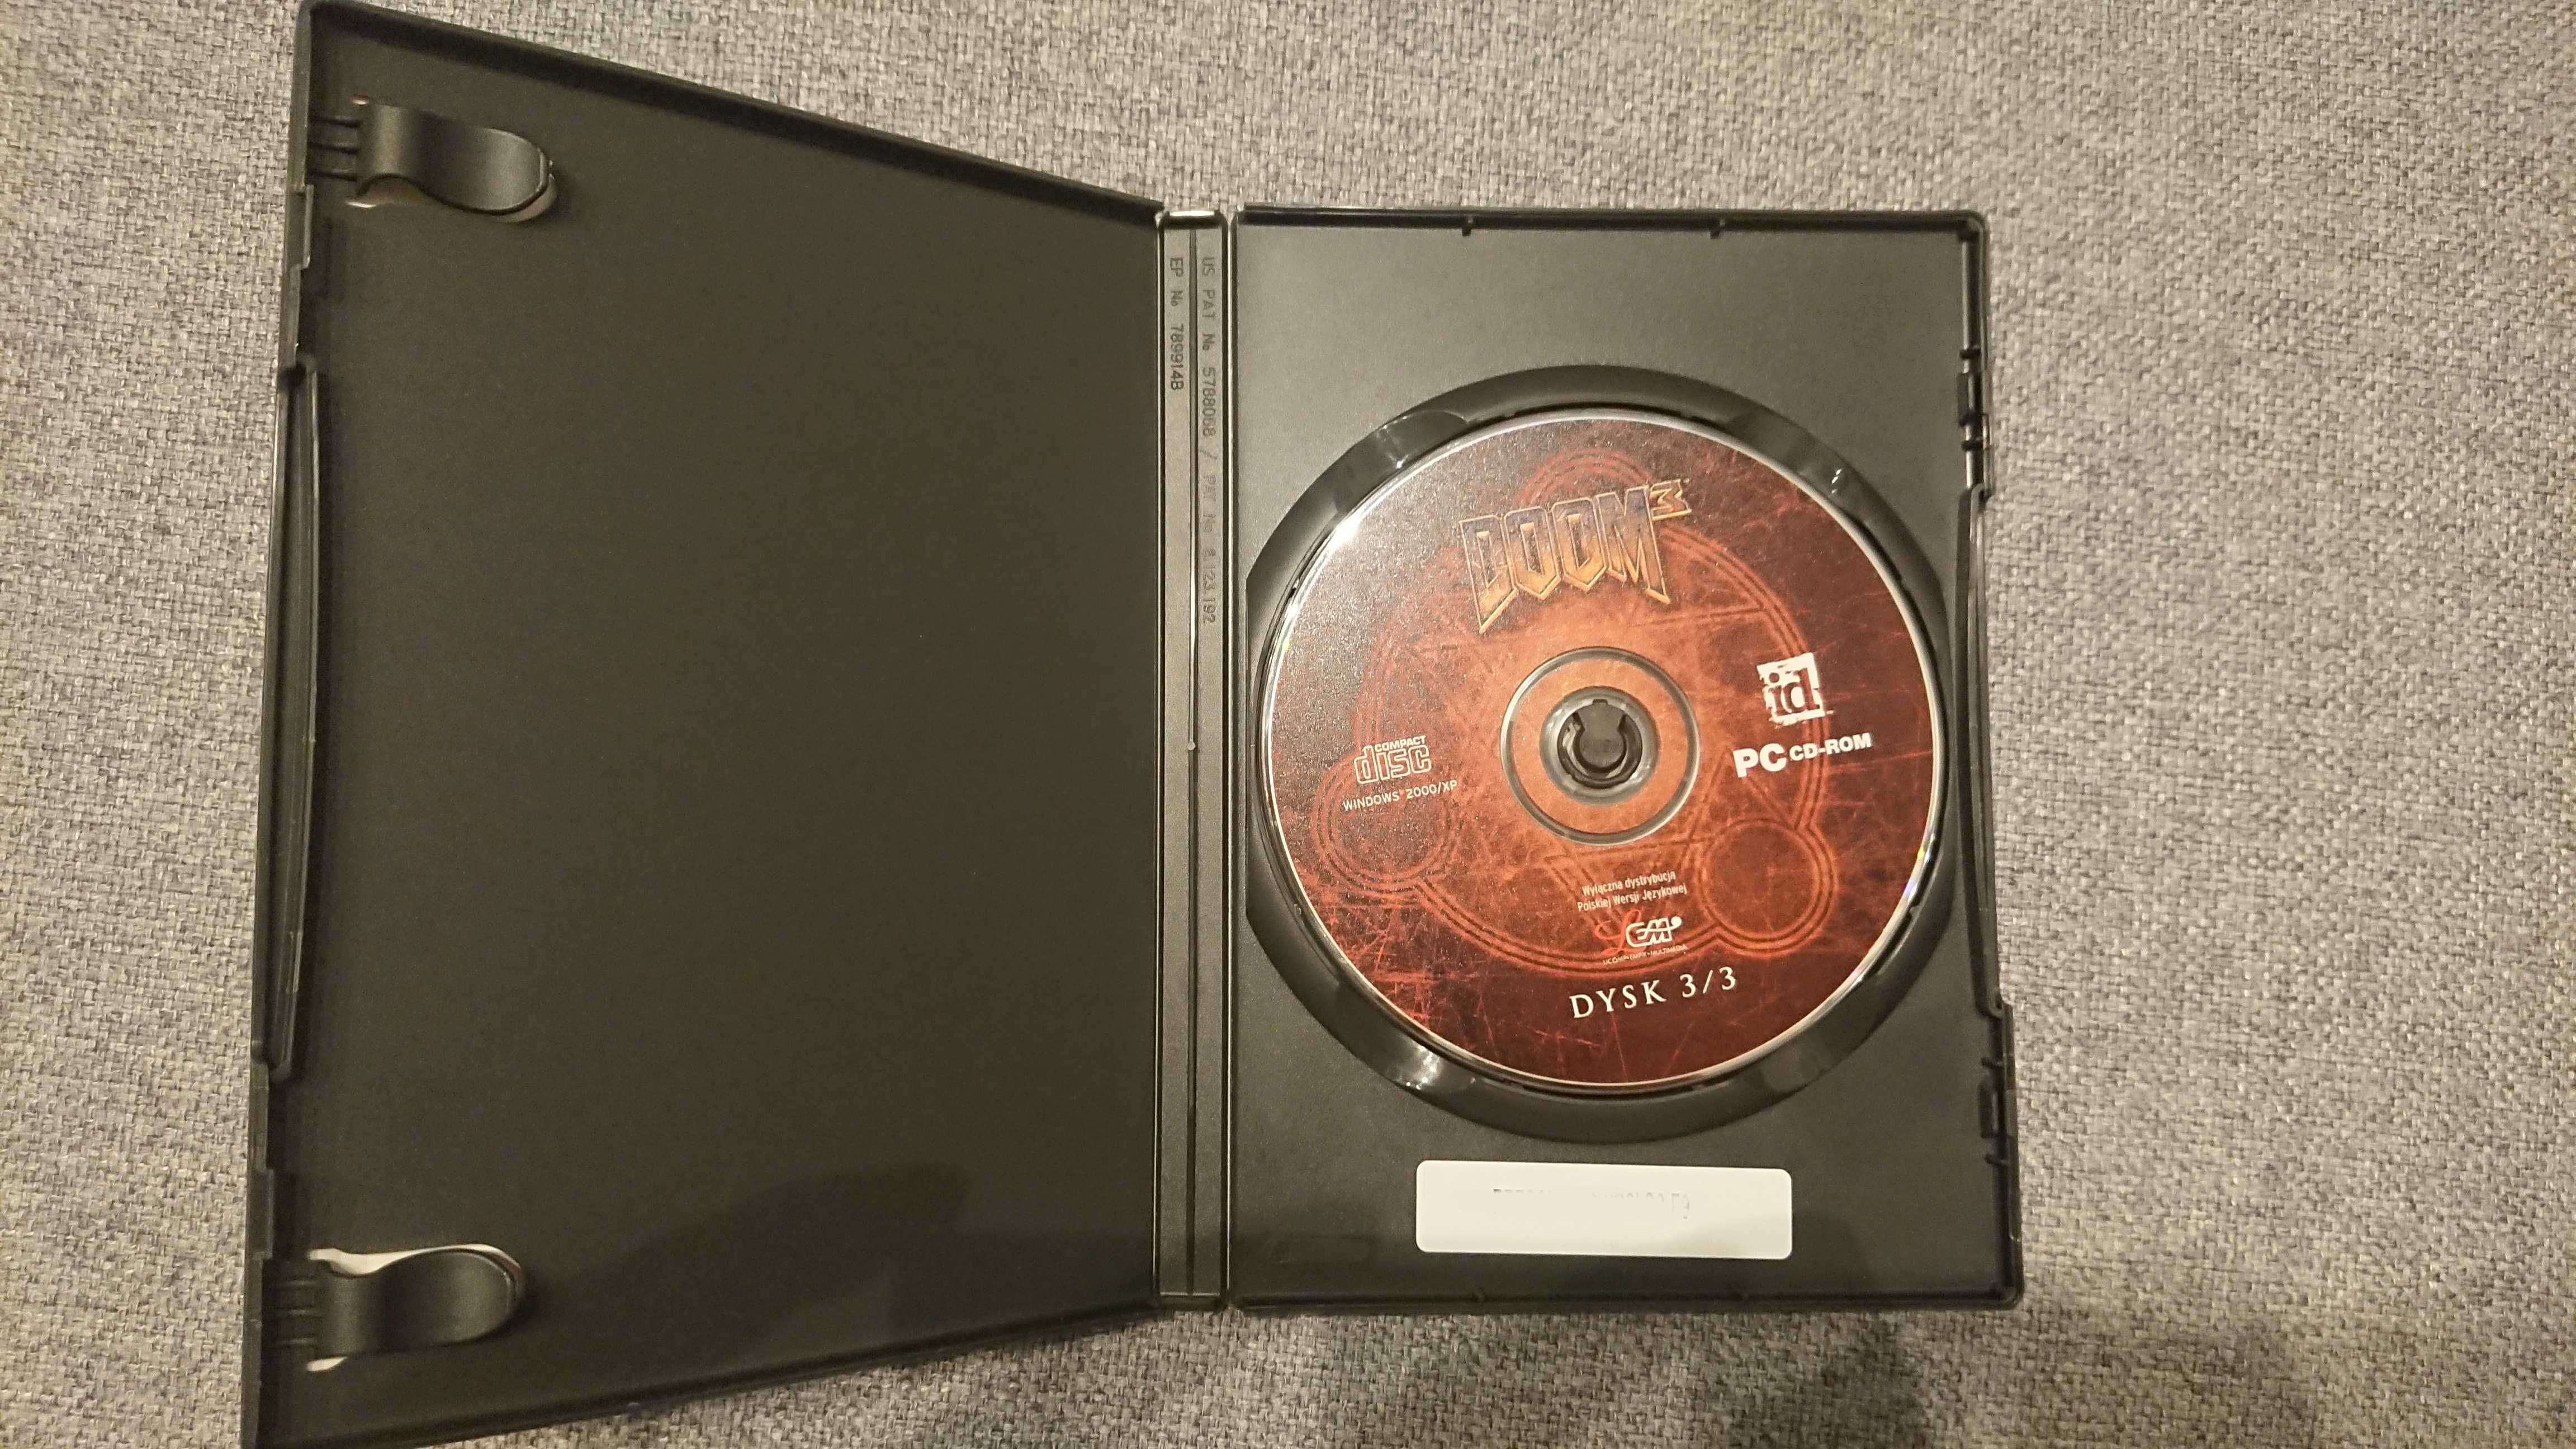 Gra Doom 3 - PC CD-ROM - stan bdb